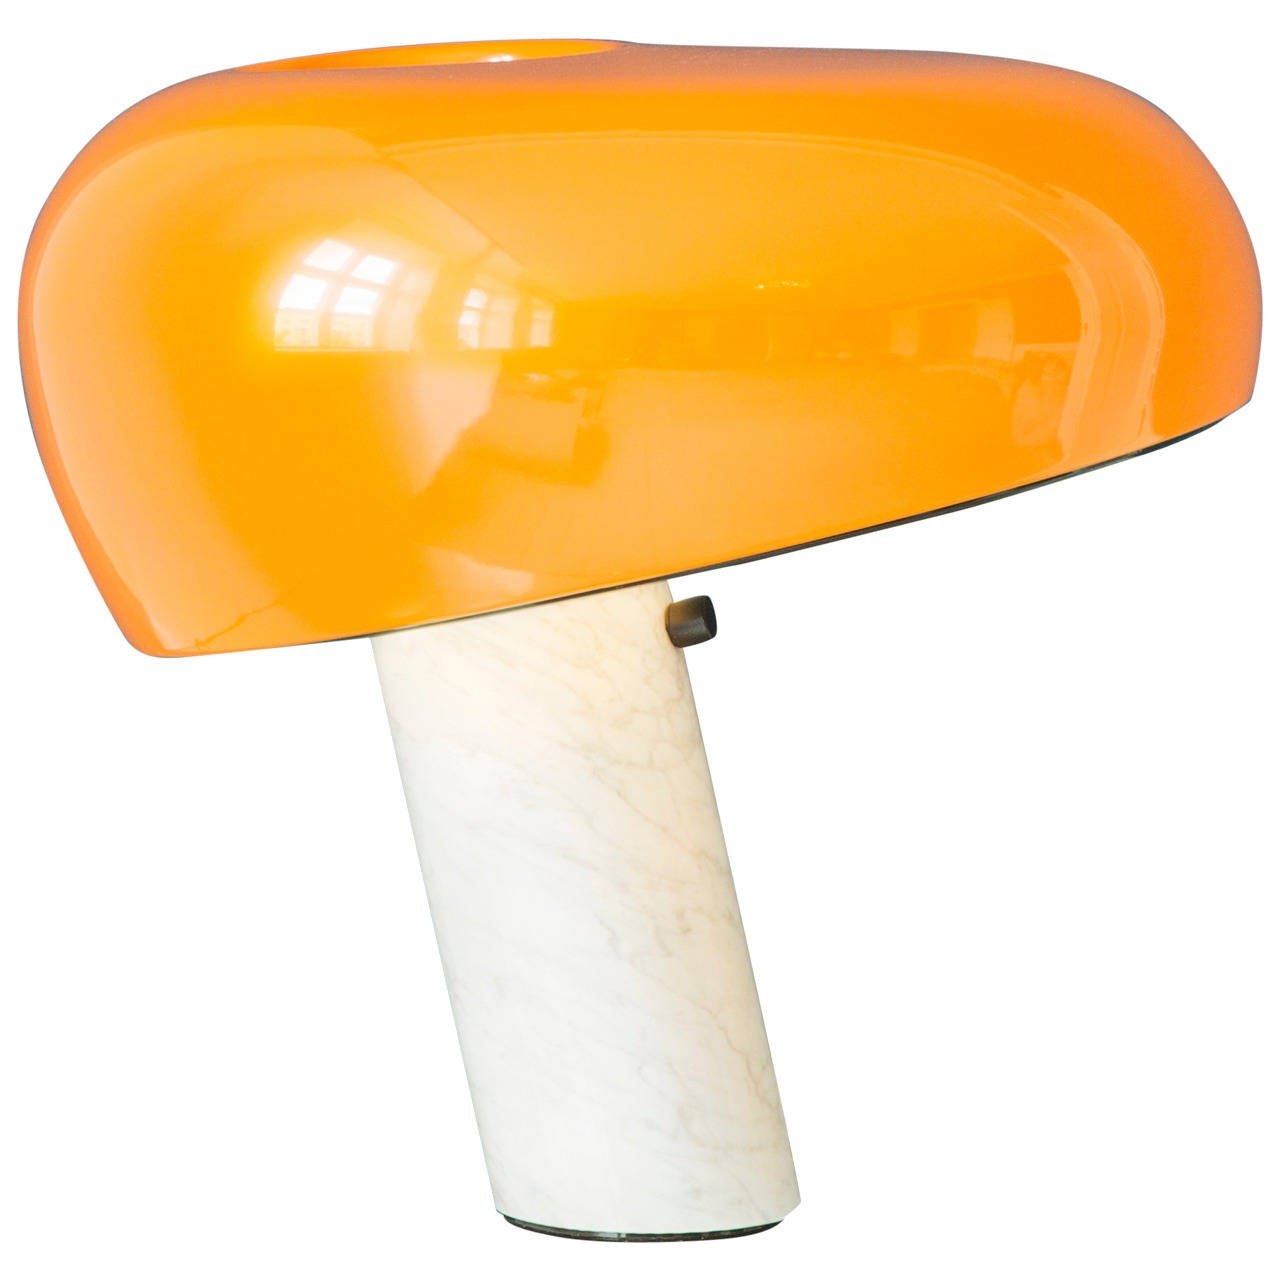 Snoopy lamp. Re-edition of Achille & Pier Castiglioni's, 1967 design made for us in June 2015.